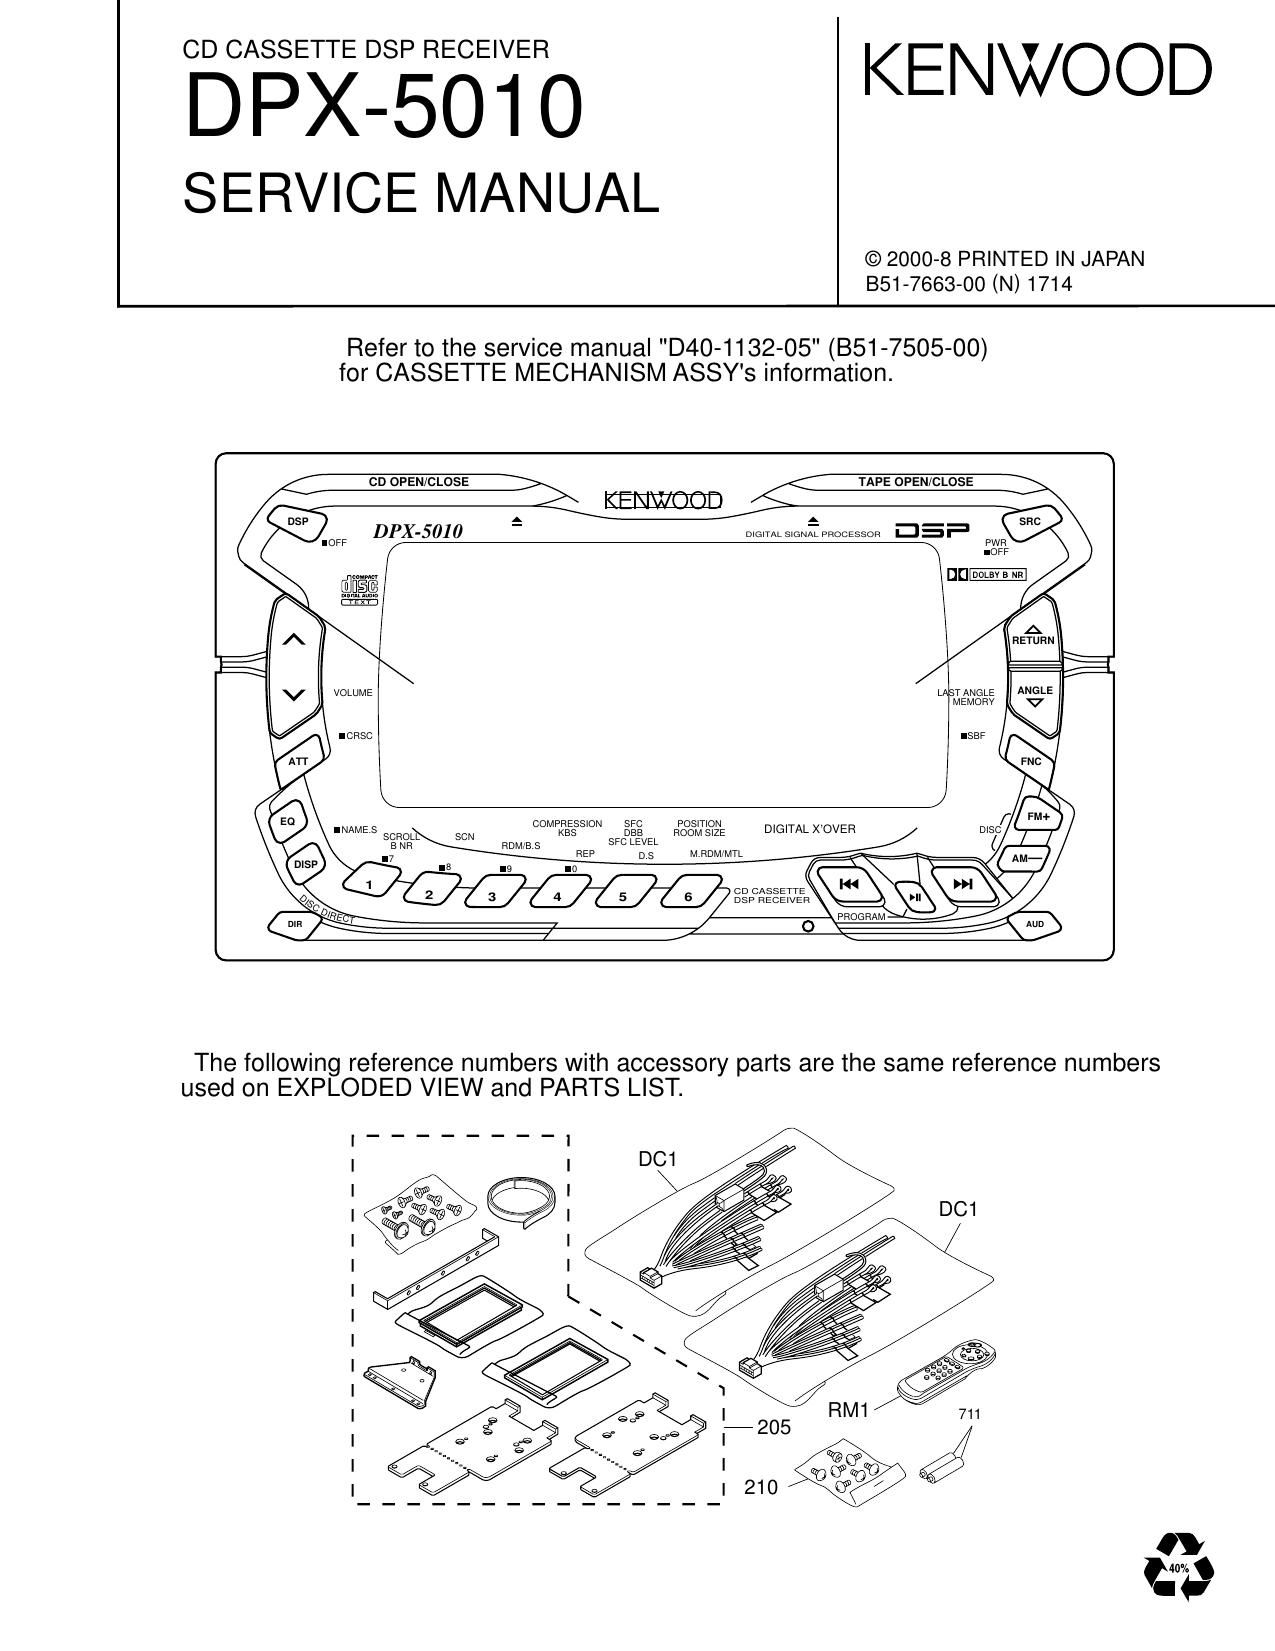 Kenwood DPX 5010 Service Manual